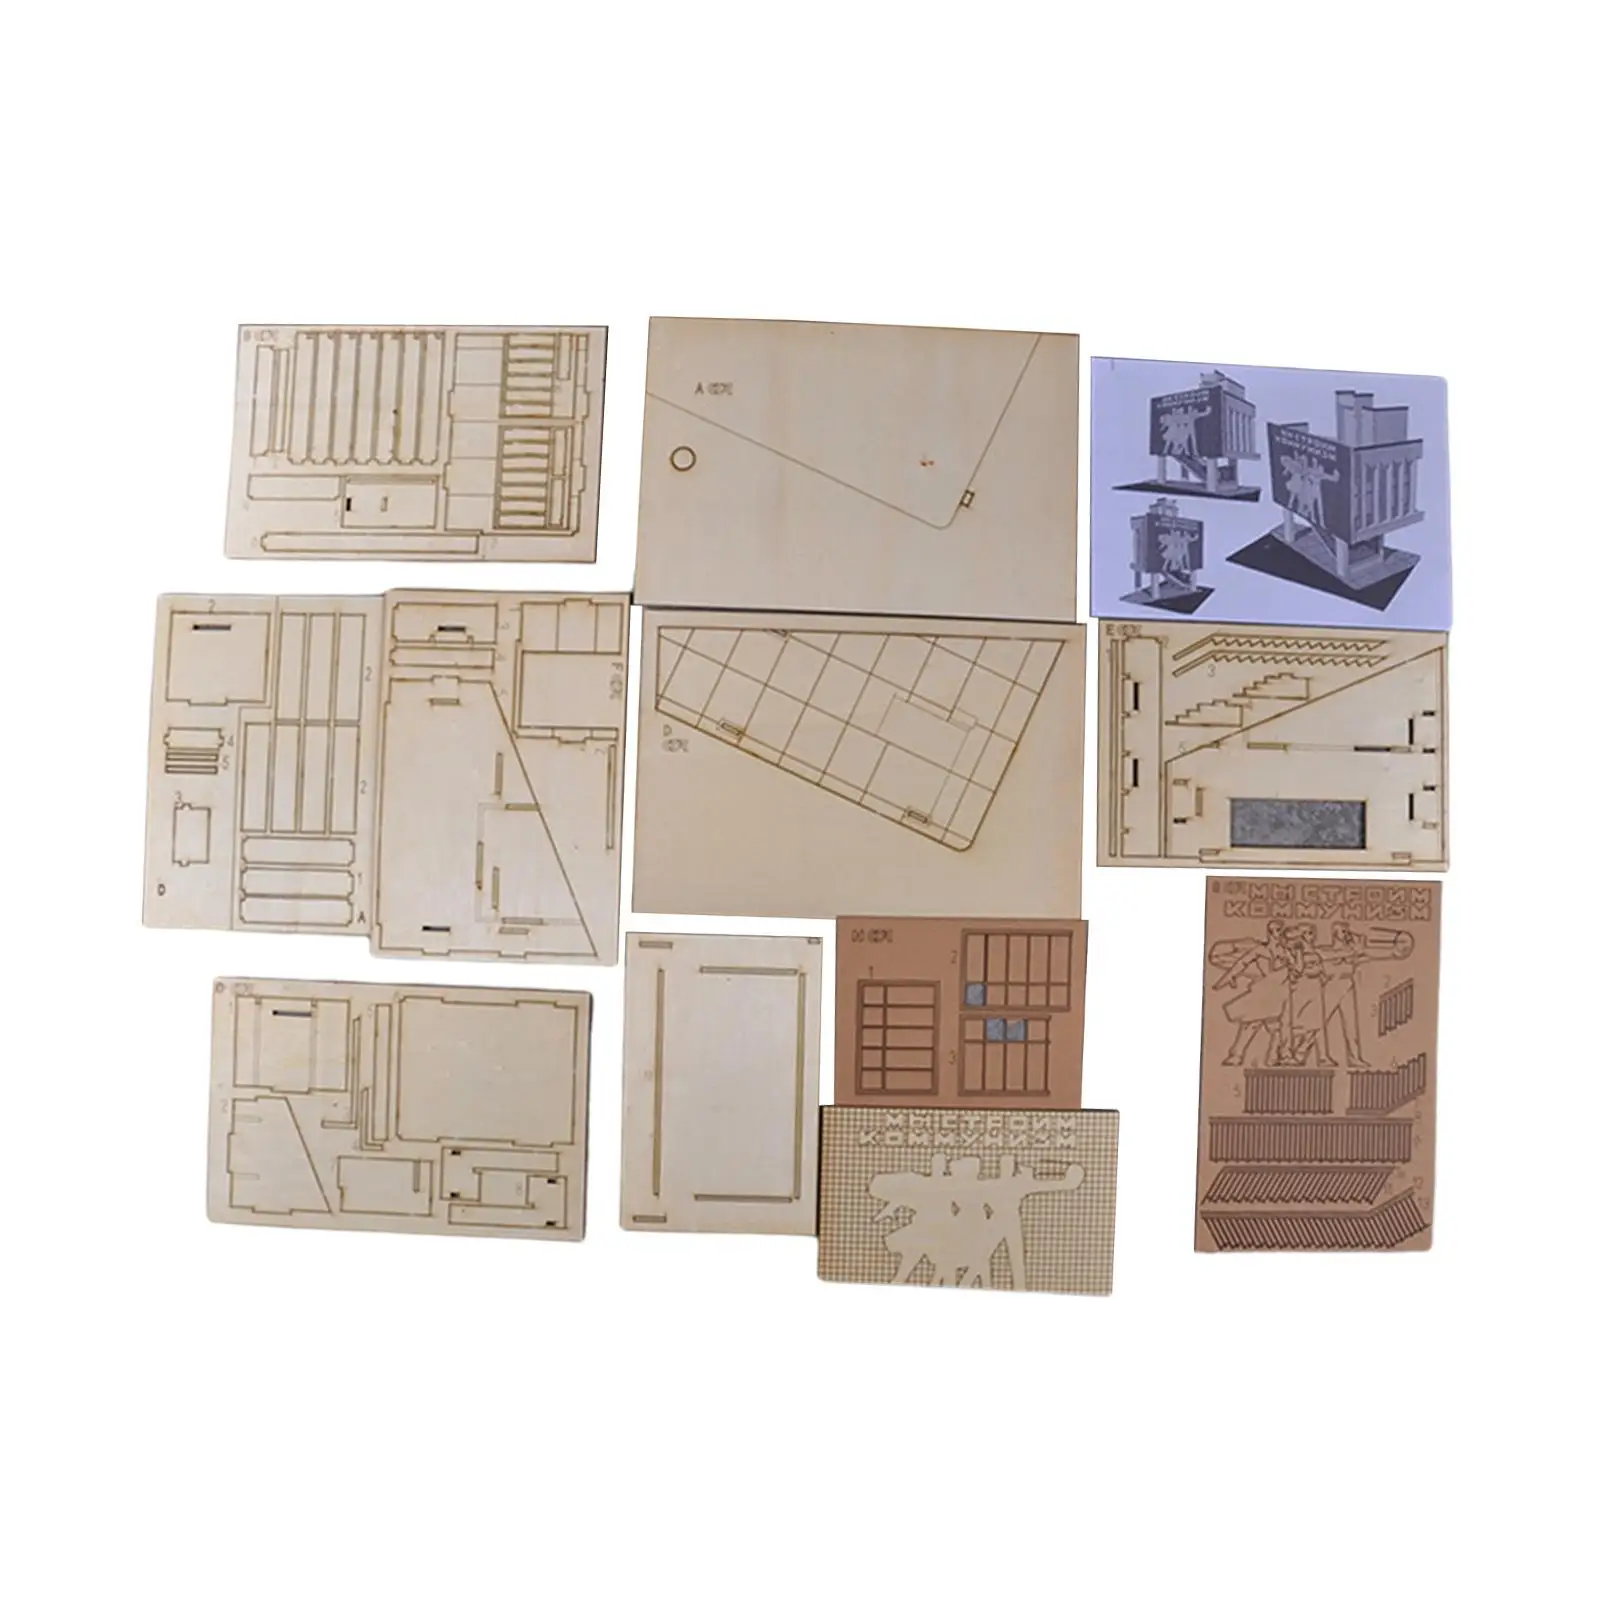 Scara 1/35 Arhitectura Machete Unassembly pentru Diorama Peisaj Layout Layout - 2